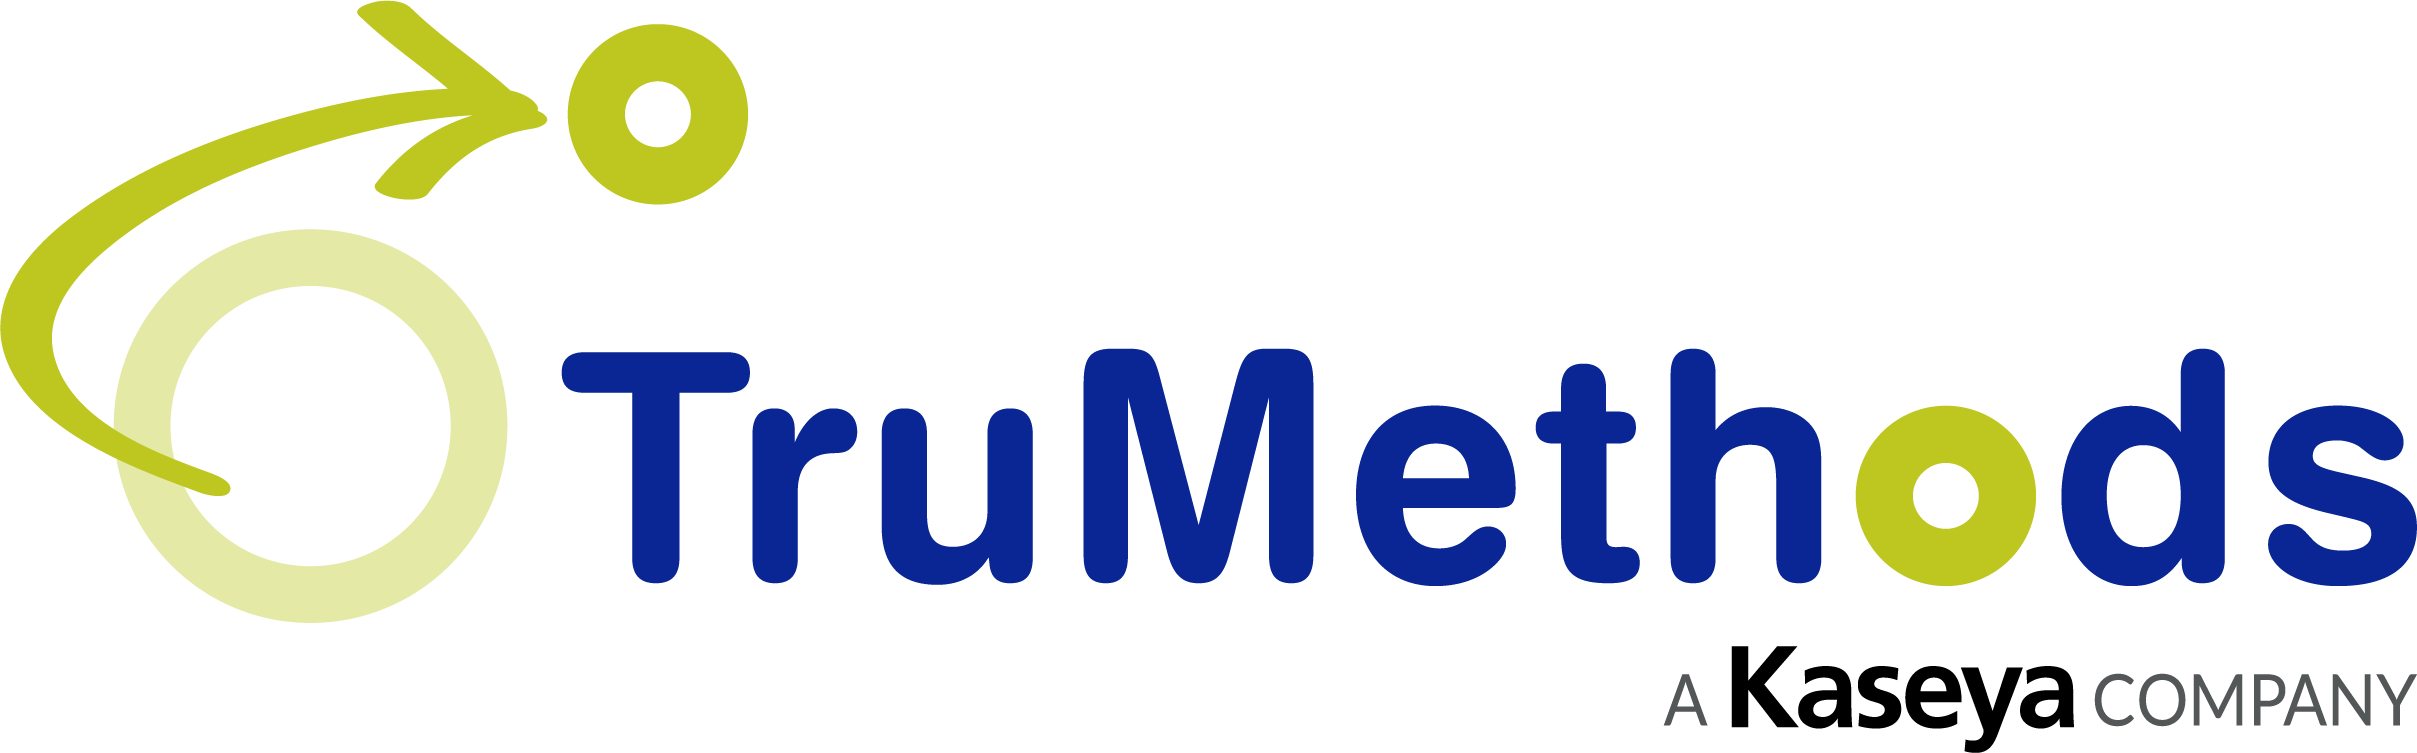 TruMethods logo